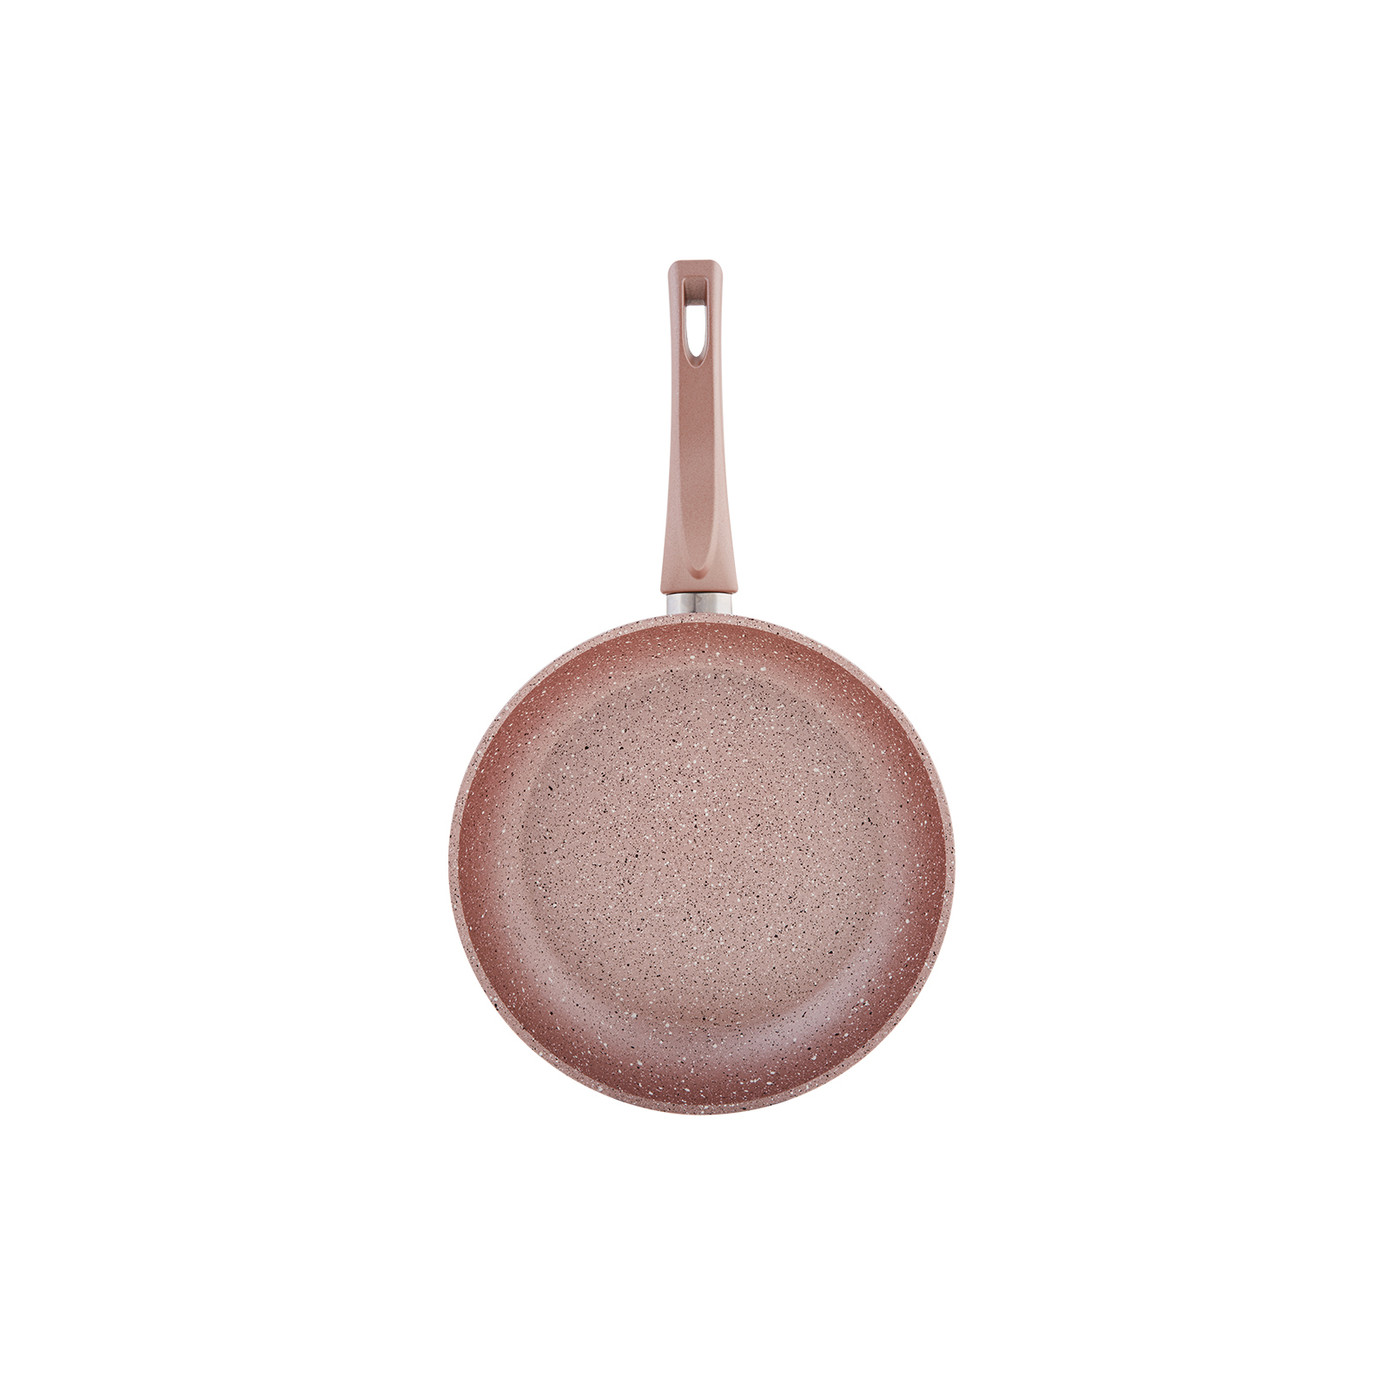 Emsan Premium-S Pro Gold Pink 7 Piece Granite Cookware Set - AliExpress